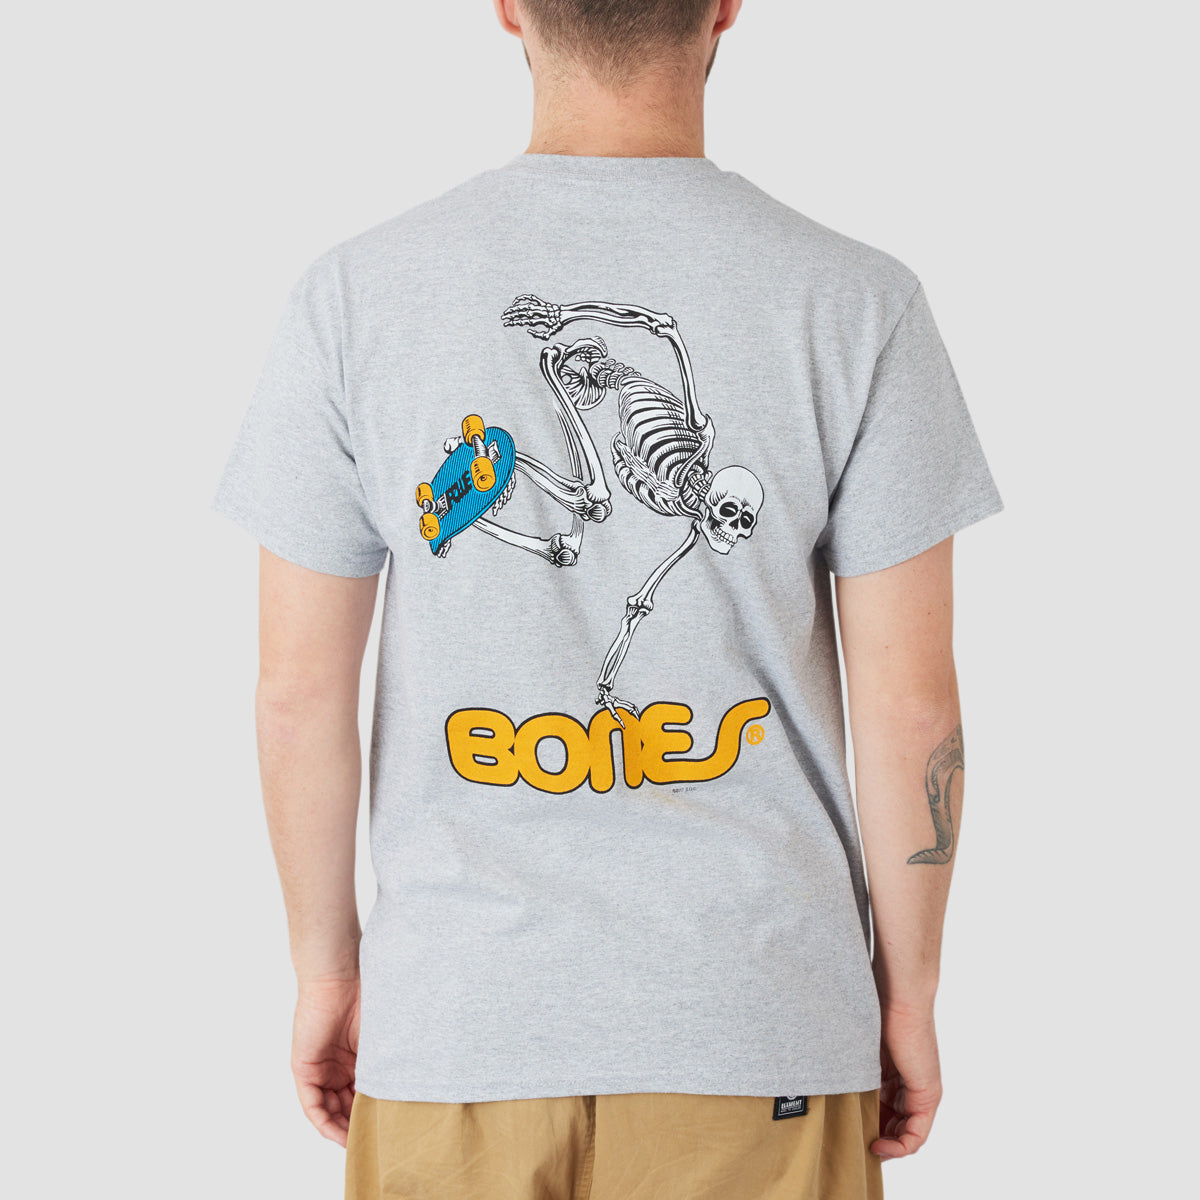 Powell Peralta Sk8board Skeleton T-Shirt Sport Grey